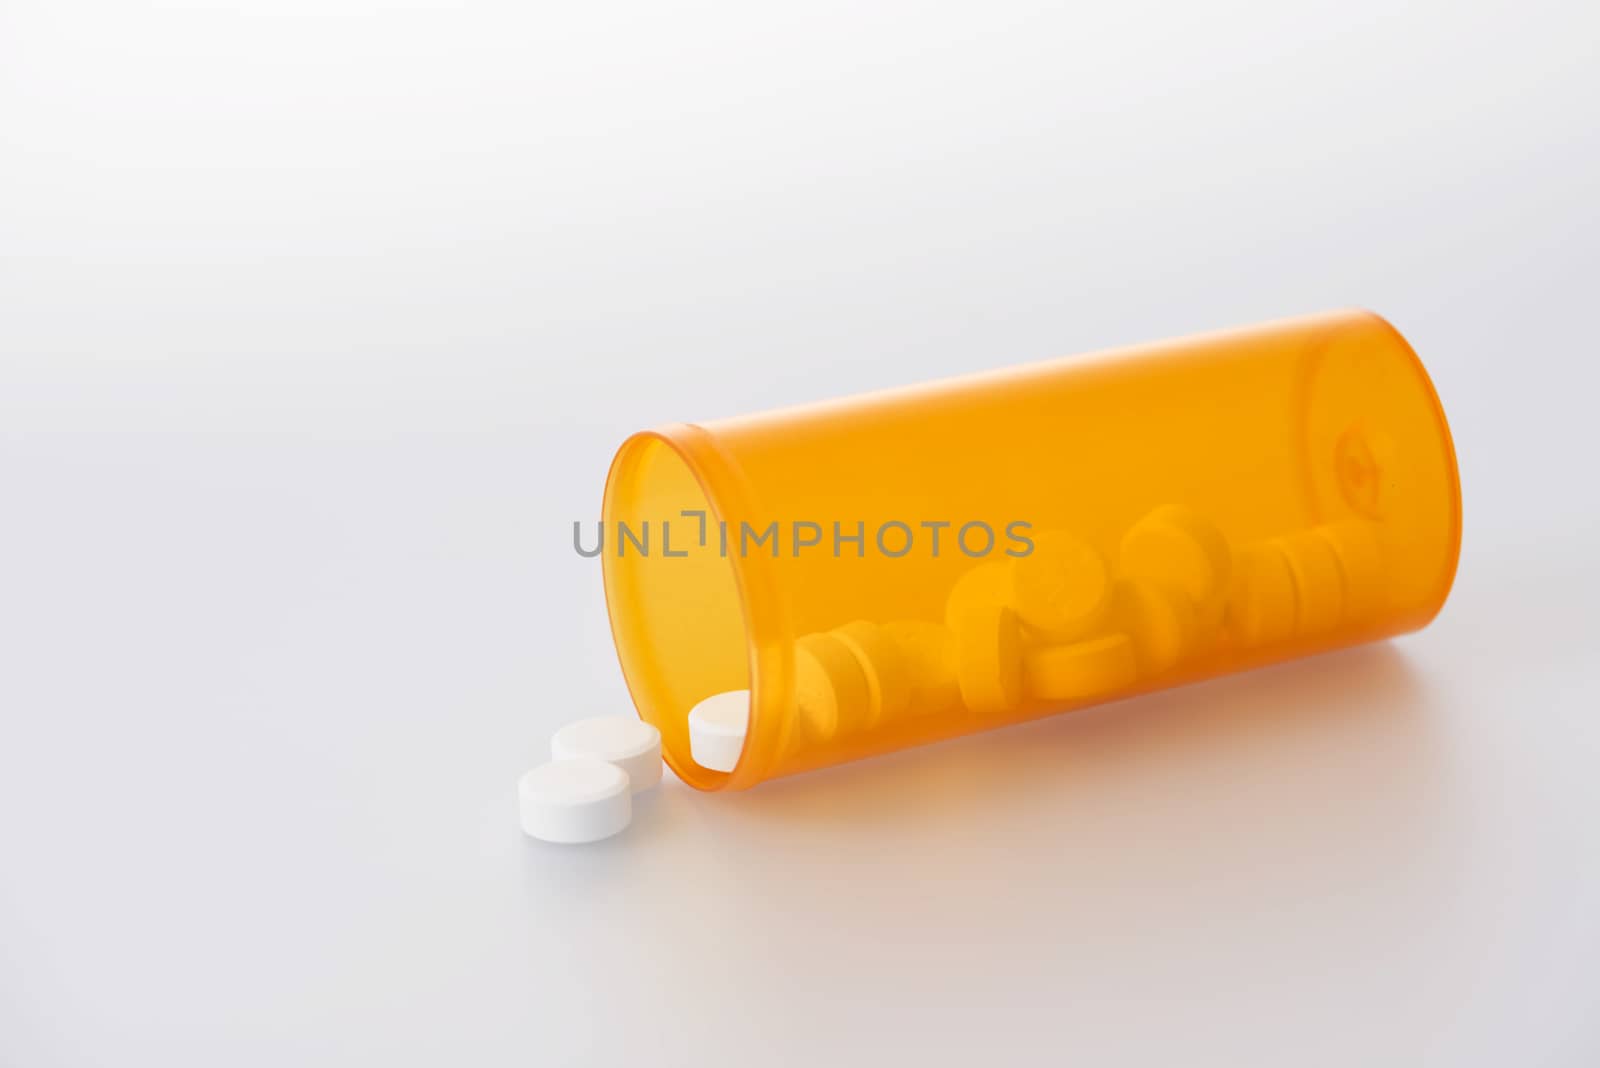 Prescription pills spilling out of bottle